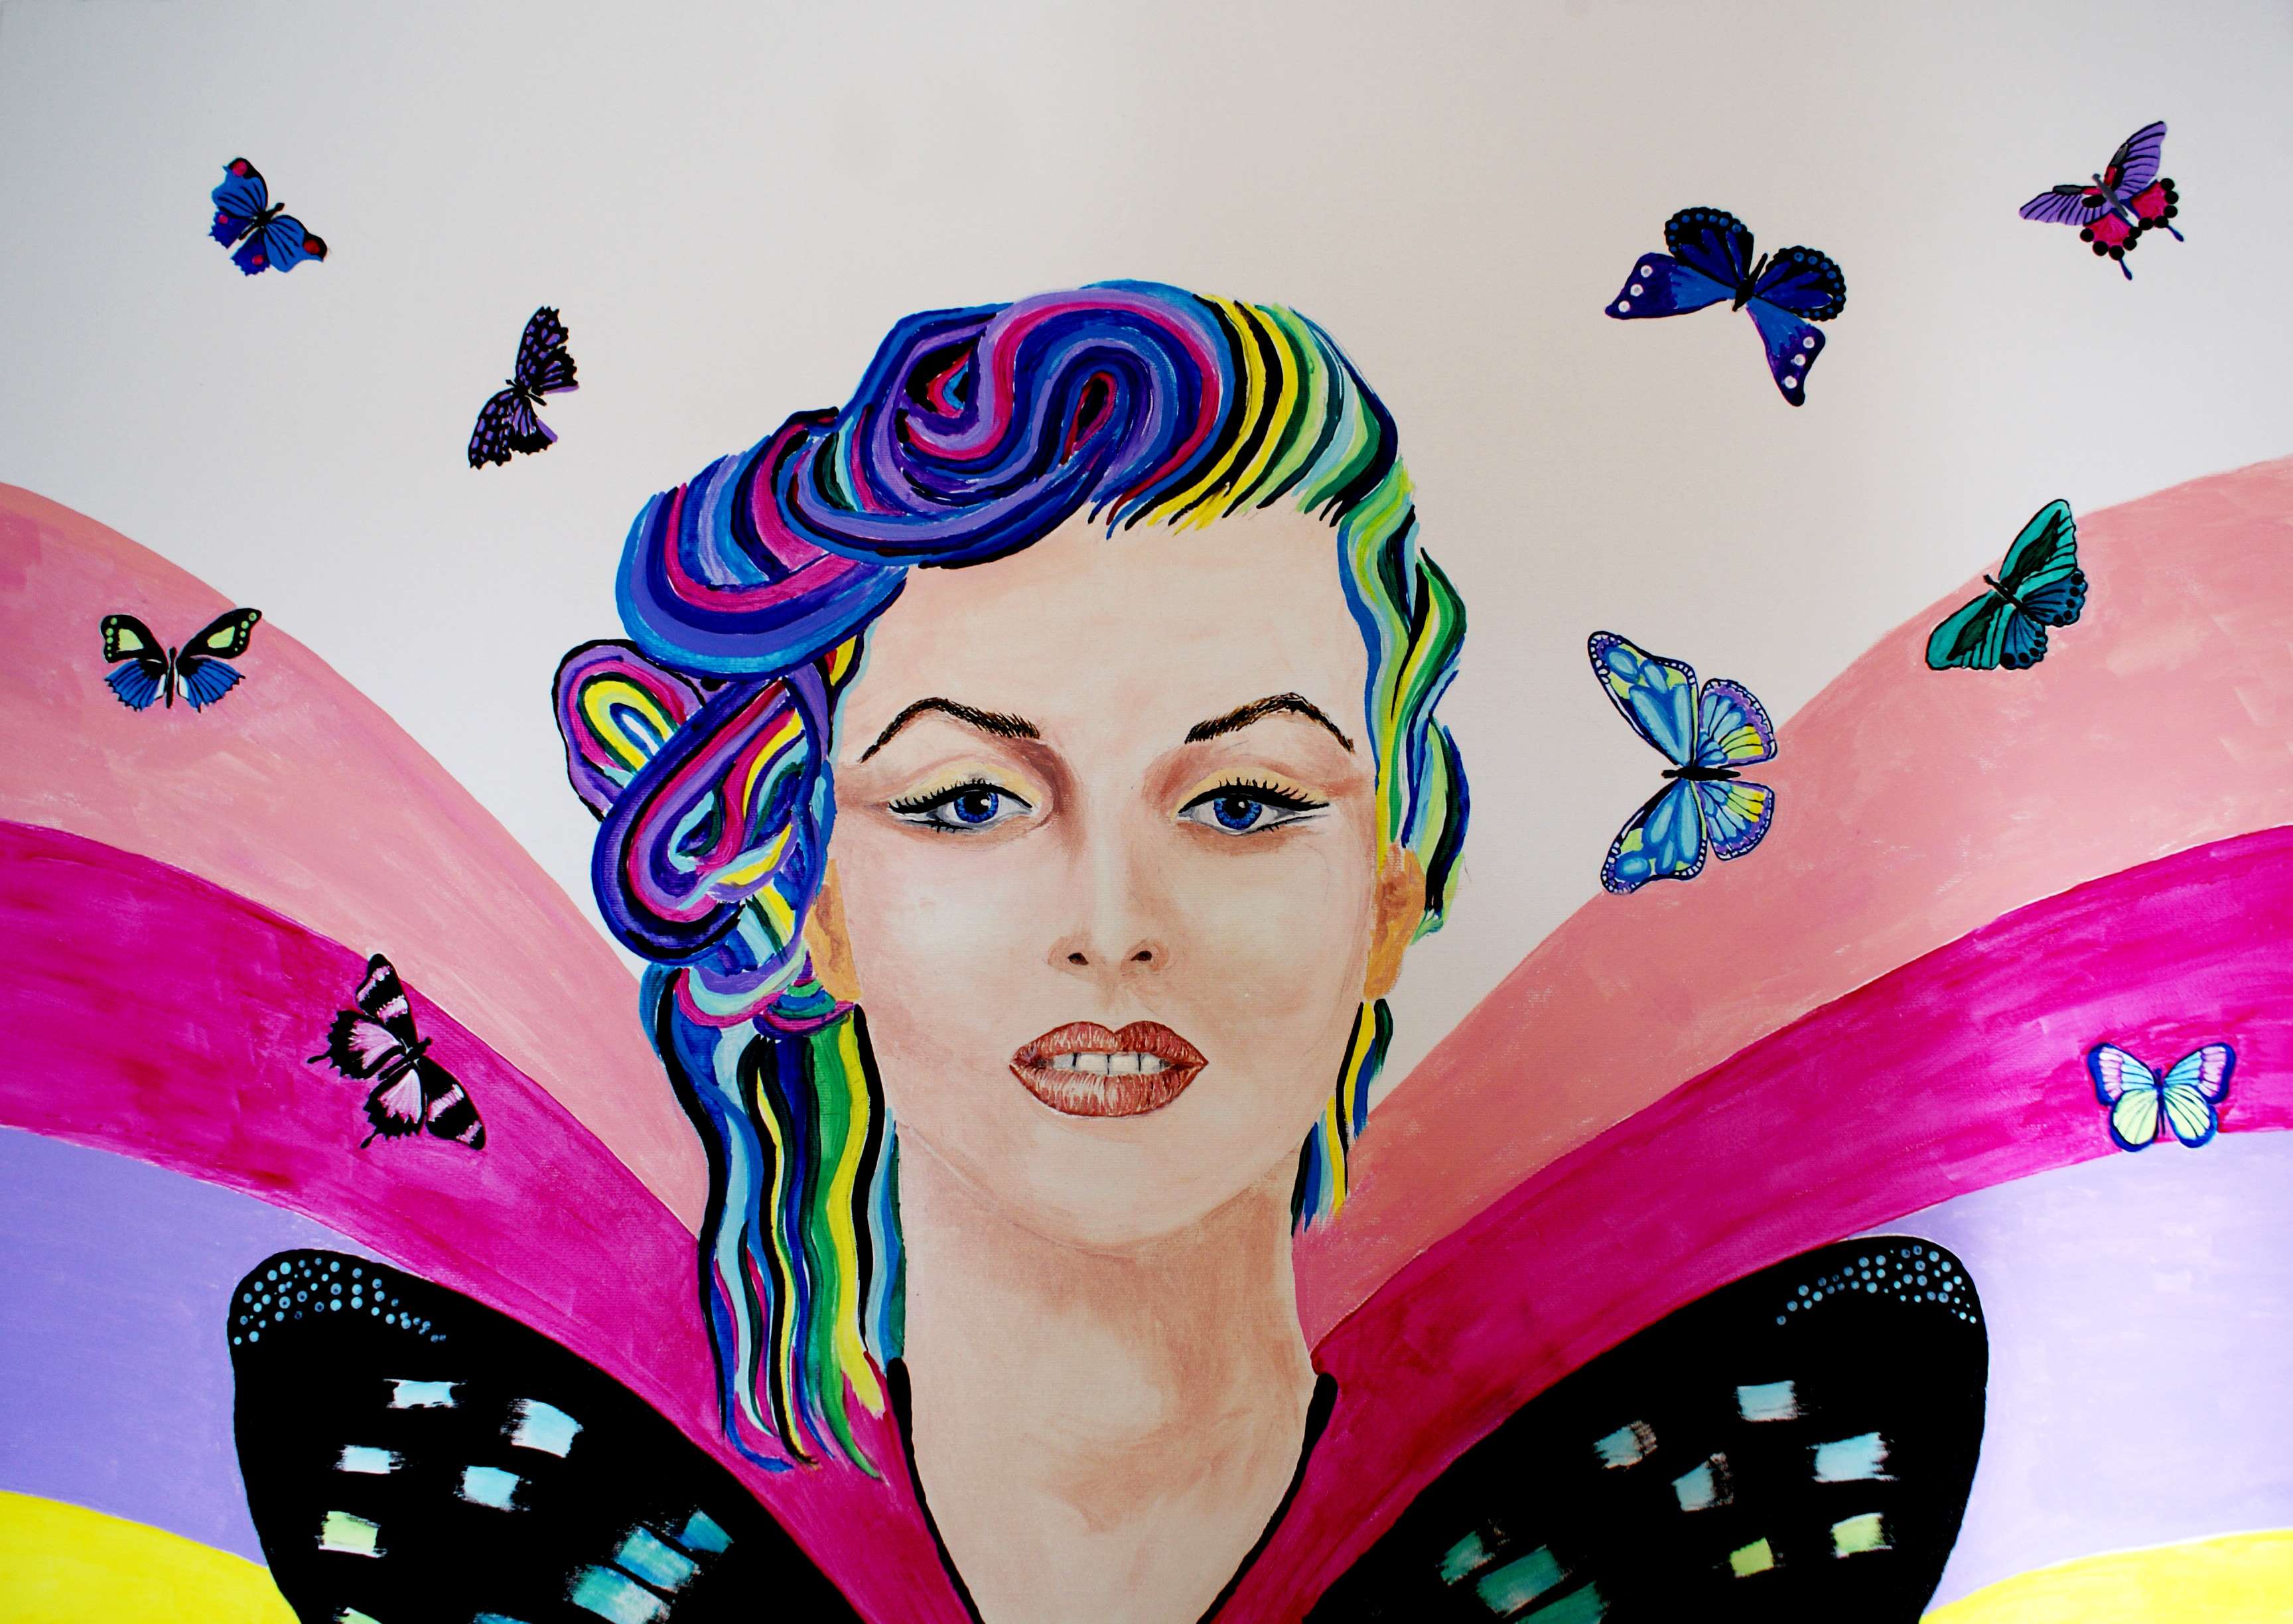 Free-as-a-Butterfly-mixed-media-acrylic+oil-120x100cm-by-Livia-Geambasu